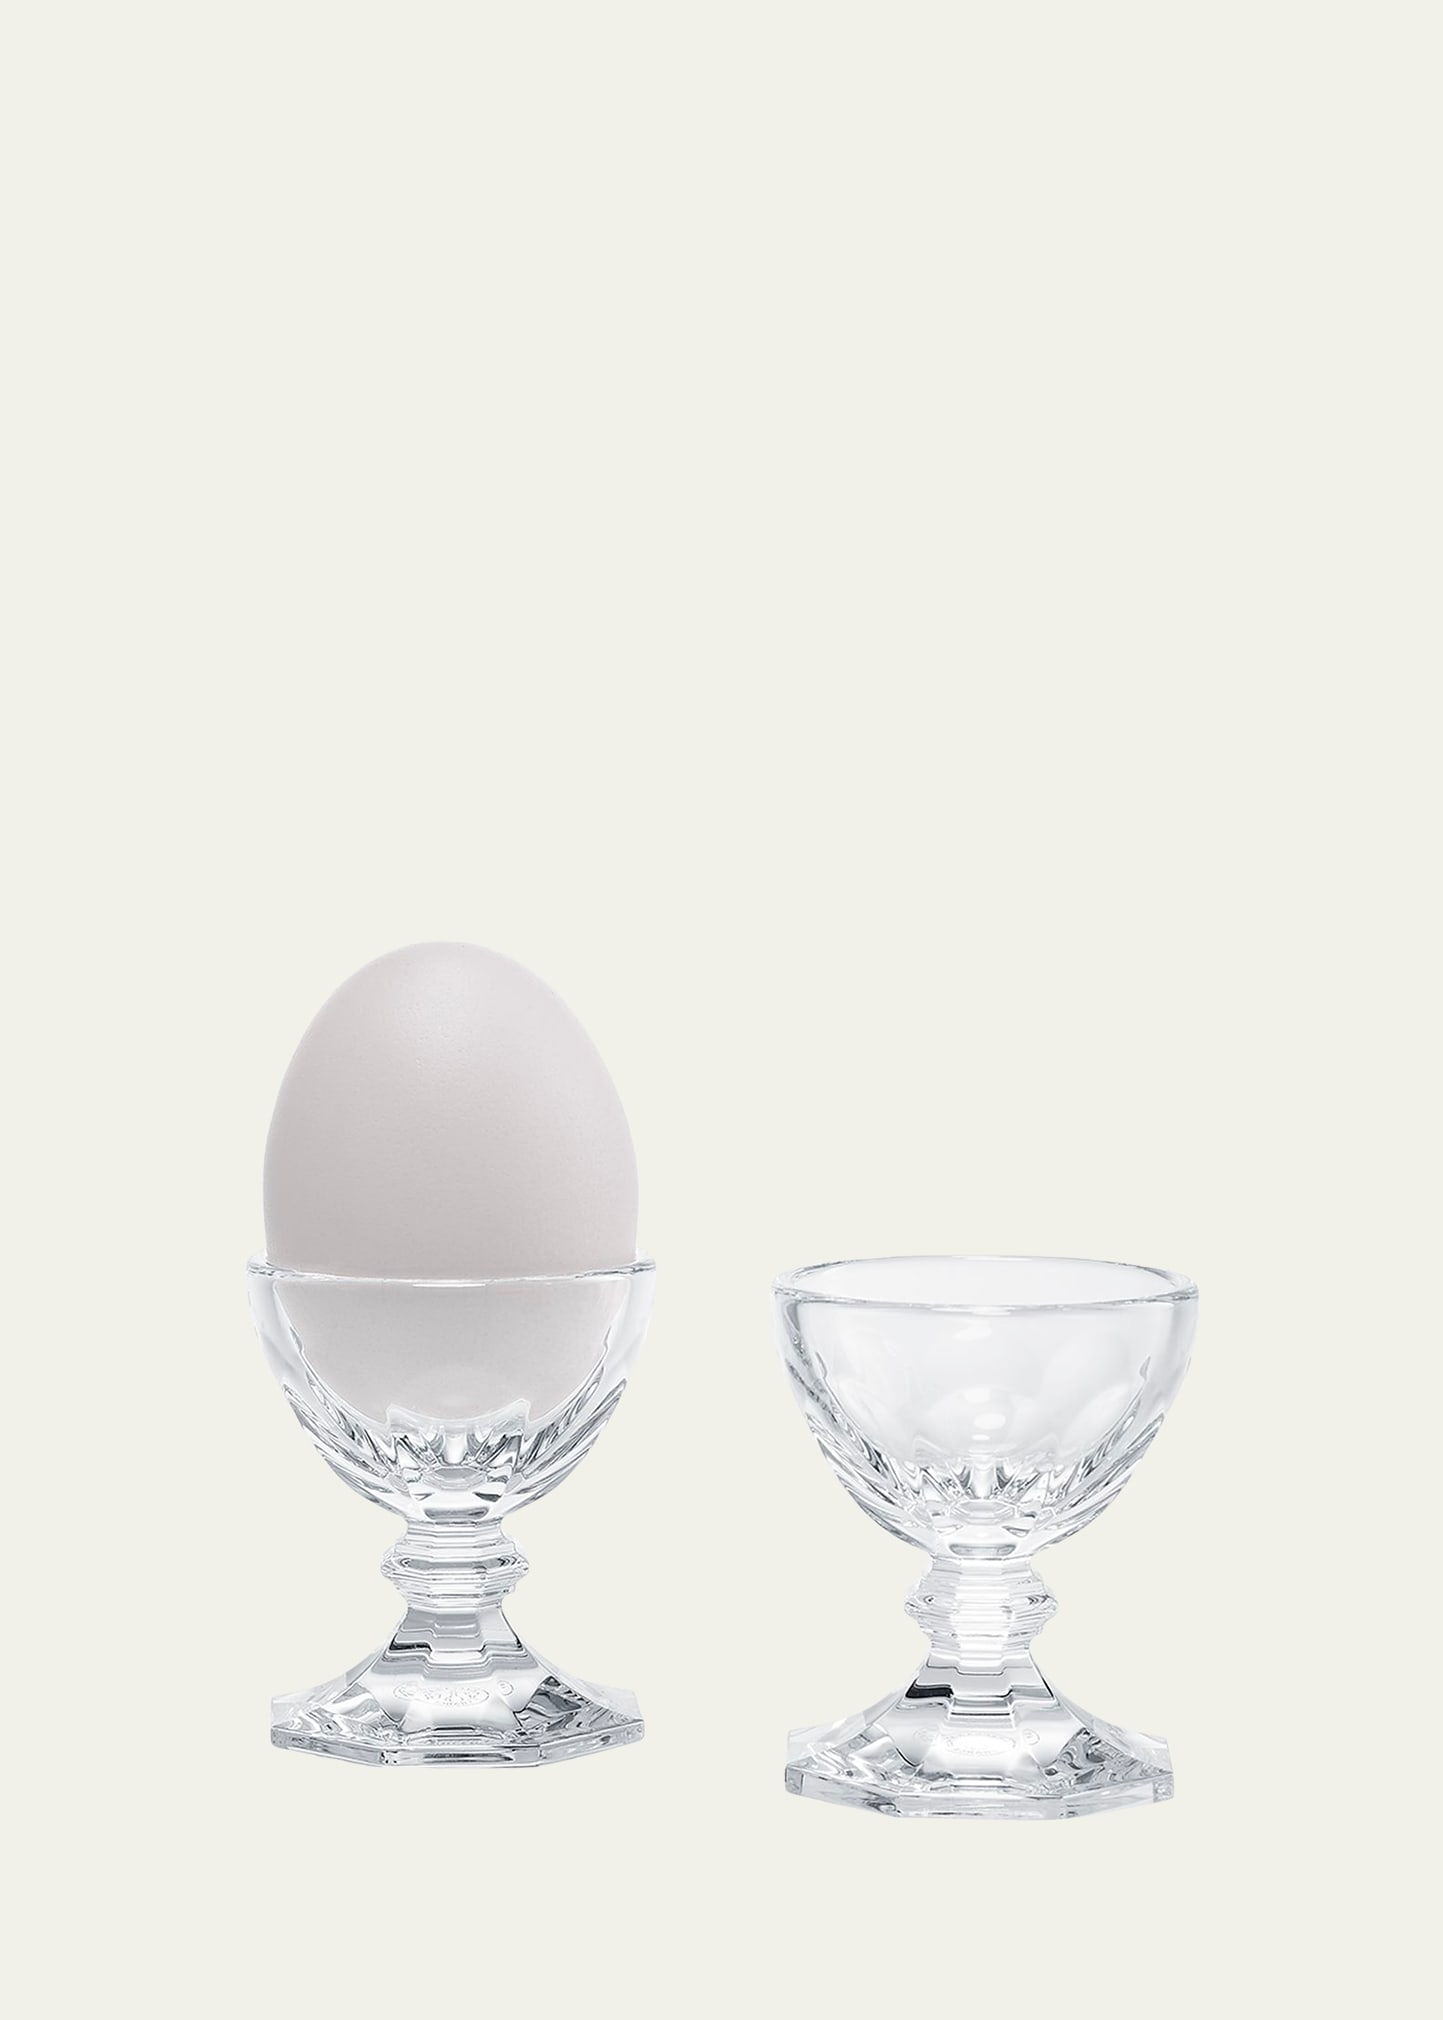 Harcourt Egg Holders, Set of 2